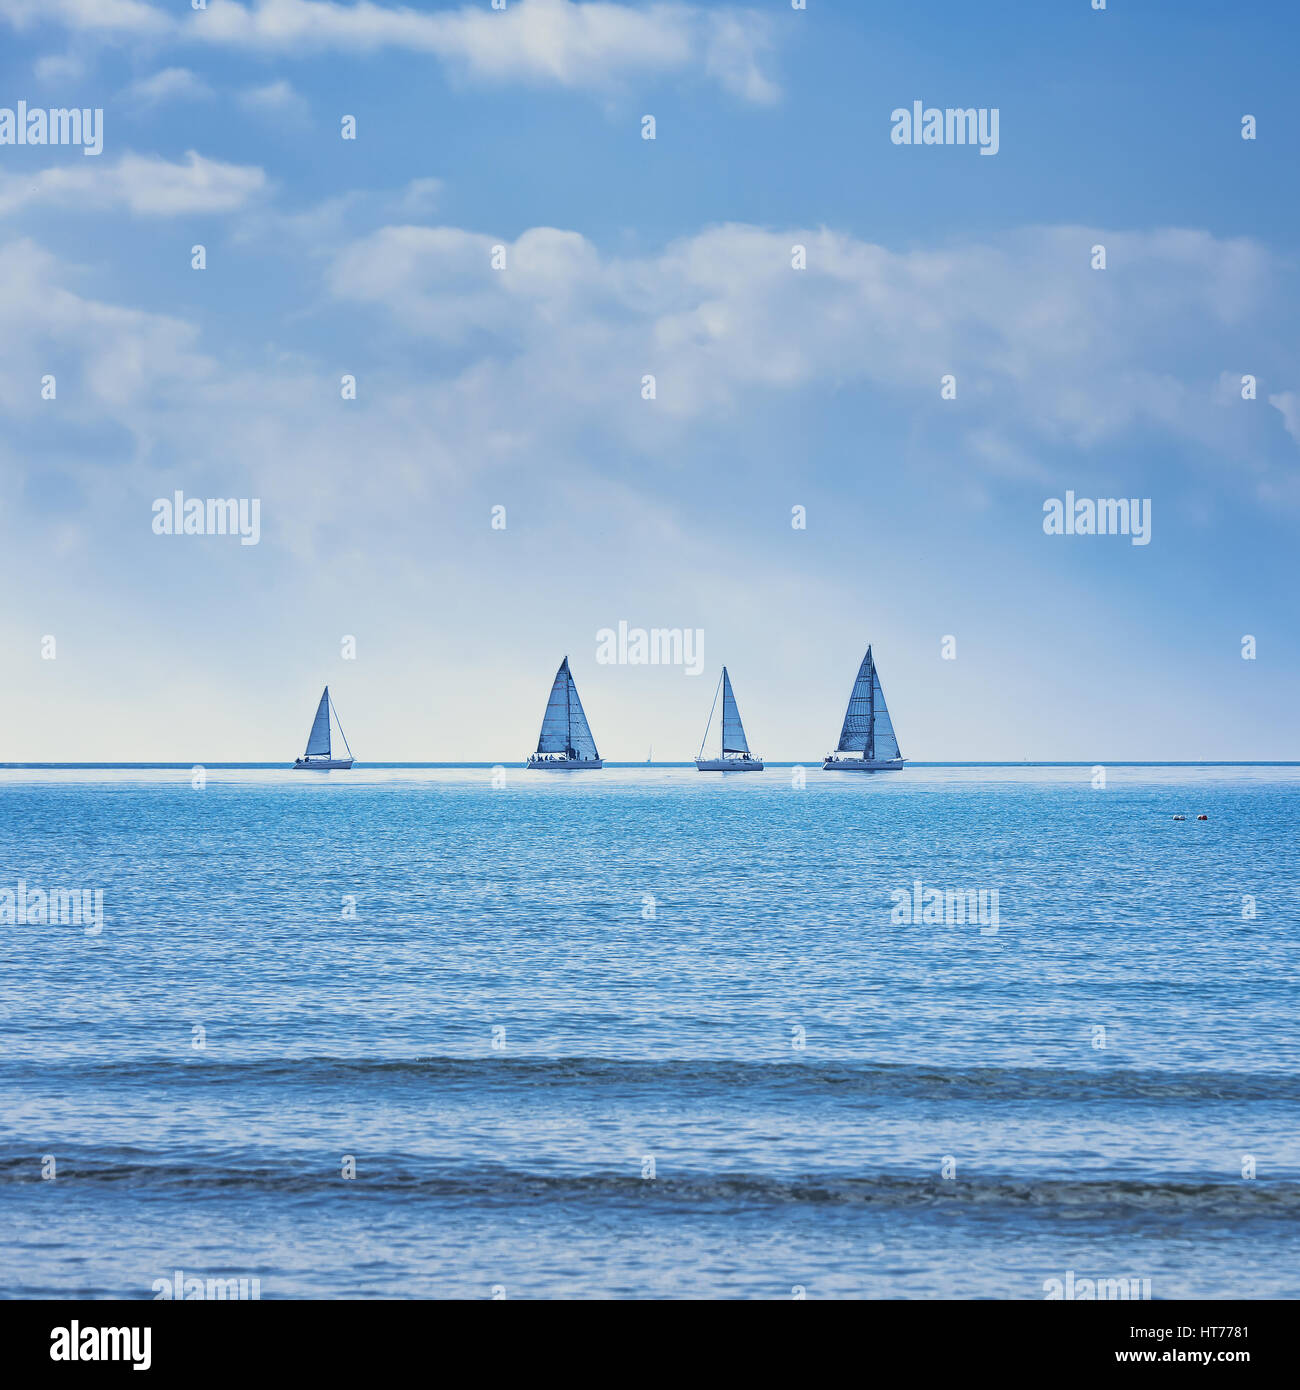 Barca a vela yacht o barca a vela regata di gruppo in gara su mare o acqua oceanica. Vista panoramica. Foto Stock